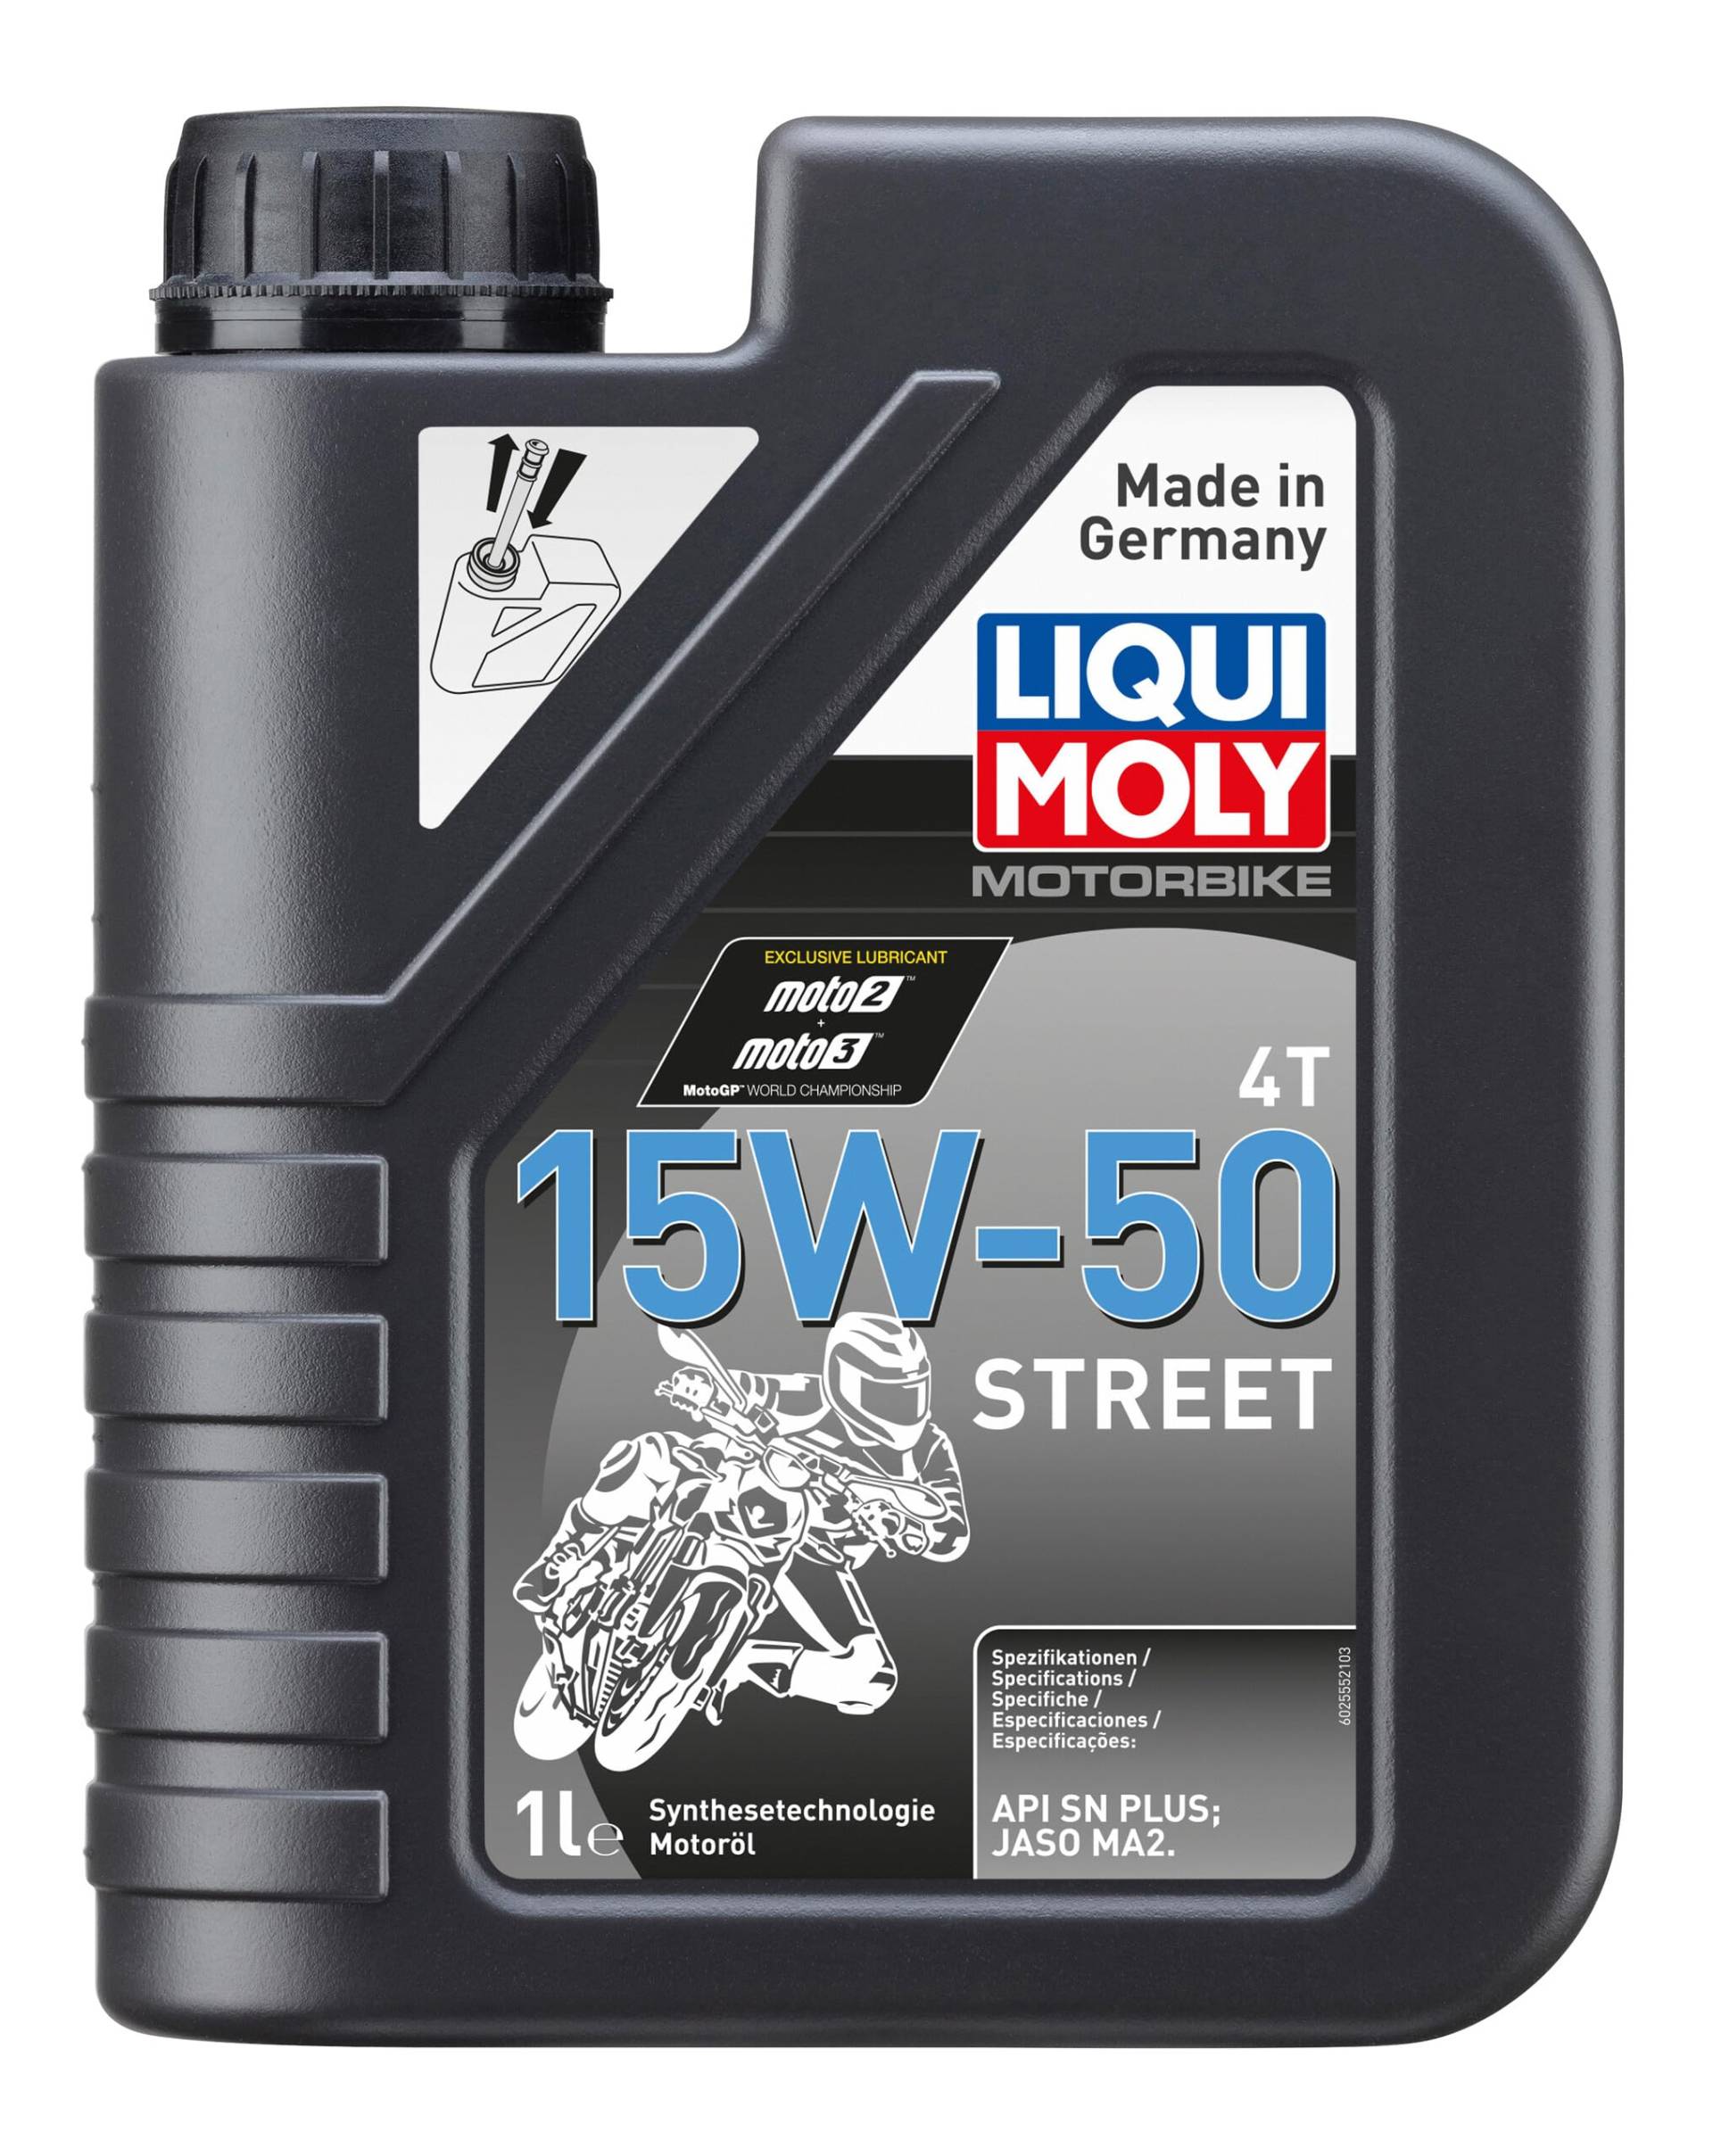 LIQUI MOLY Motorbike 4T 15W-50 Street | 1 L | Motorrad Synthesetechnologie Motoröl | Art.-Nr.: 2555 von Liqui Moly